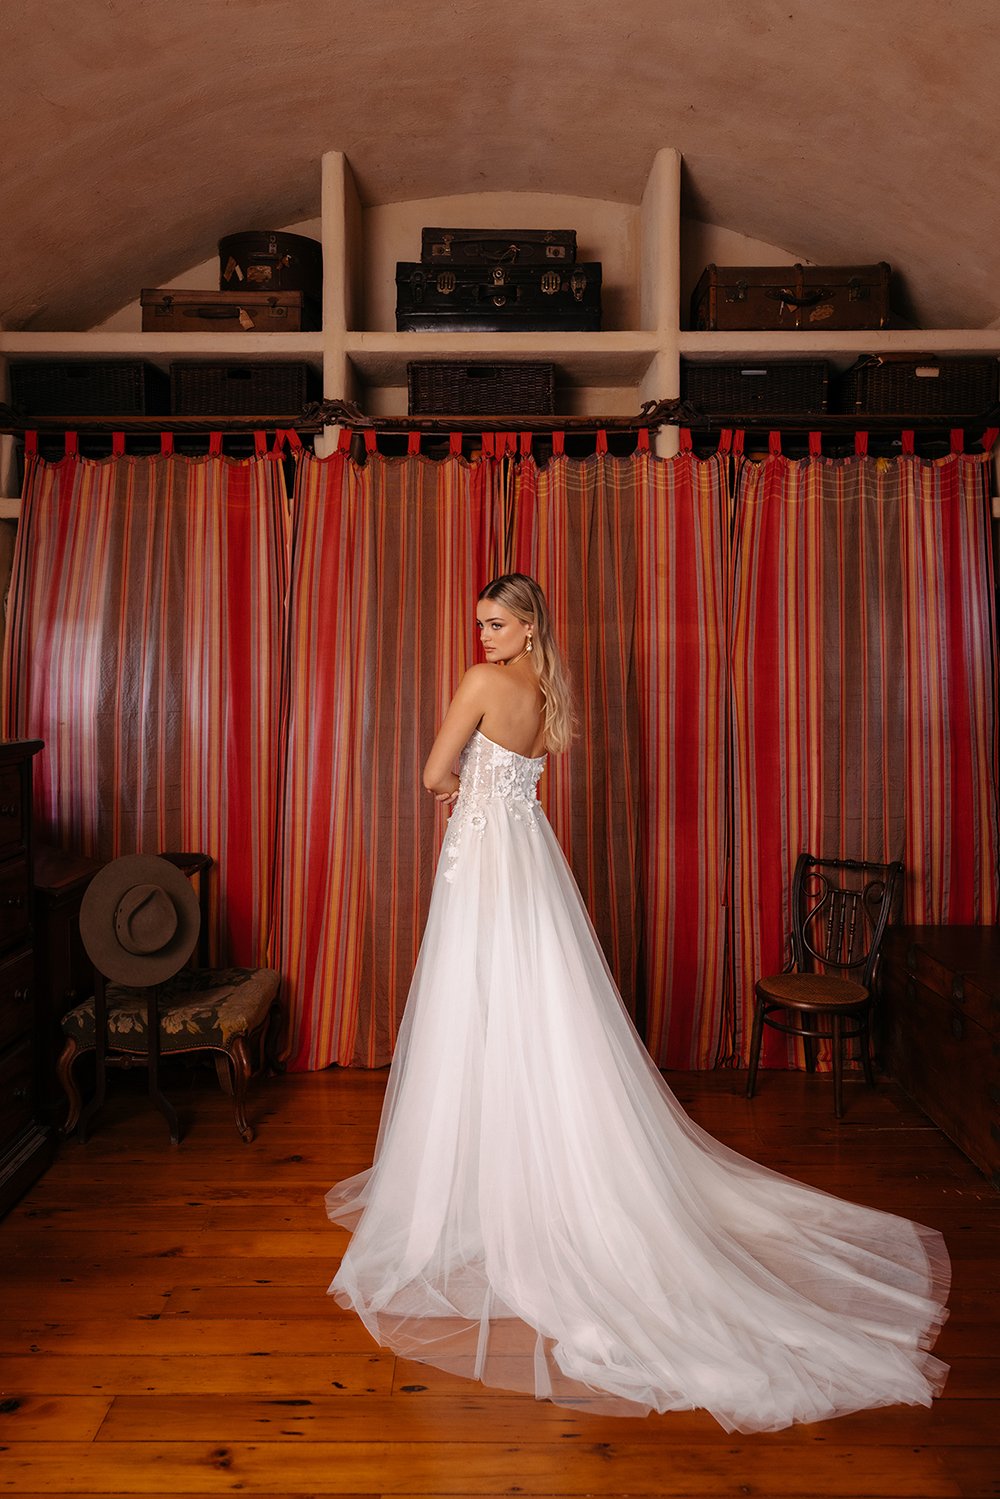 blanc-de-blanc-bridal-boutique-pittsburgh-dress-wedding-gown-true.jpg